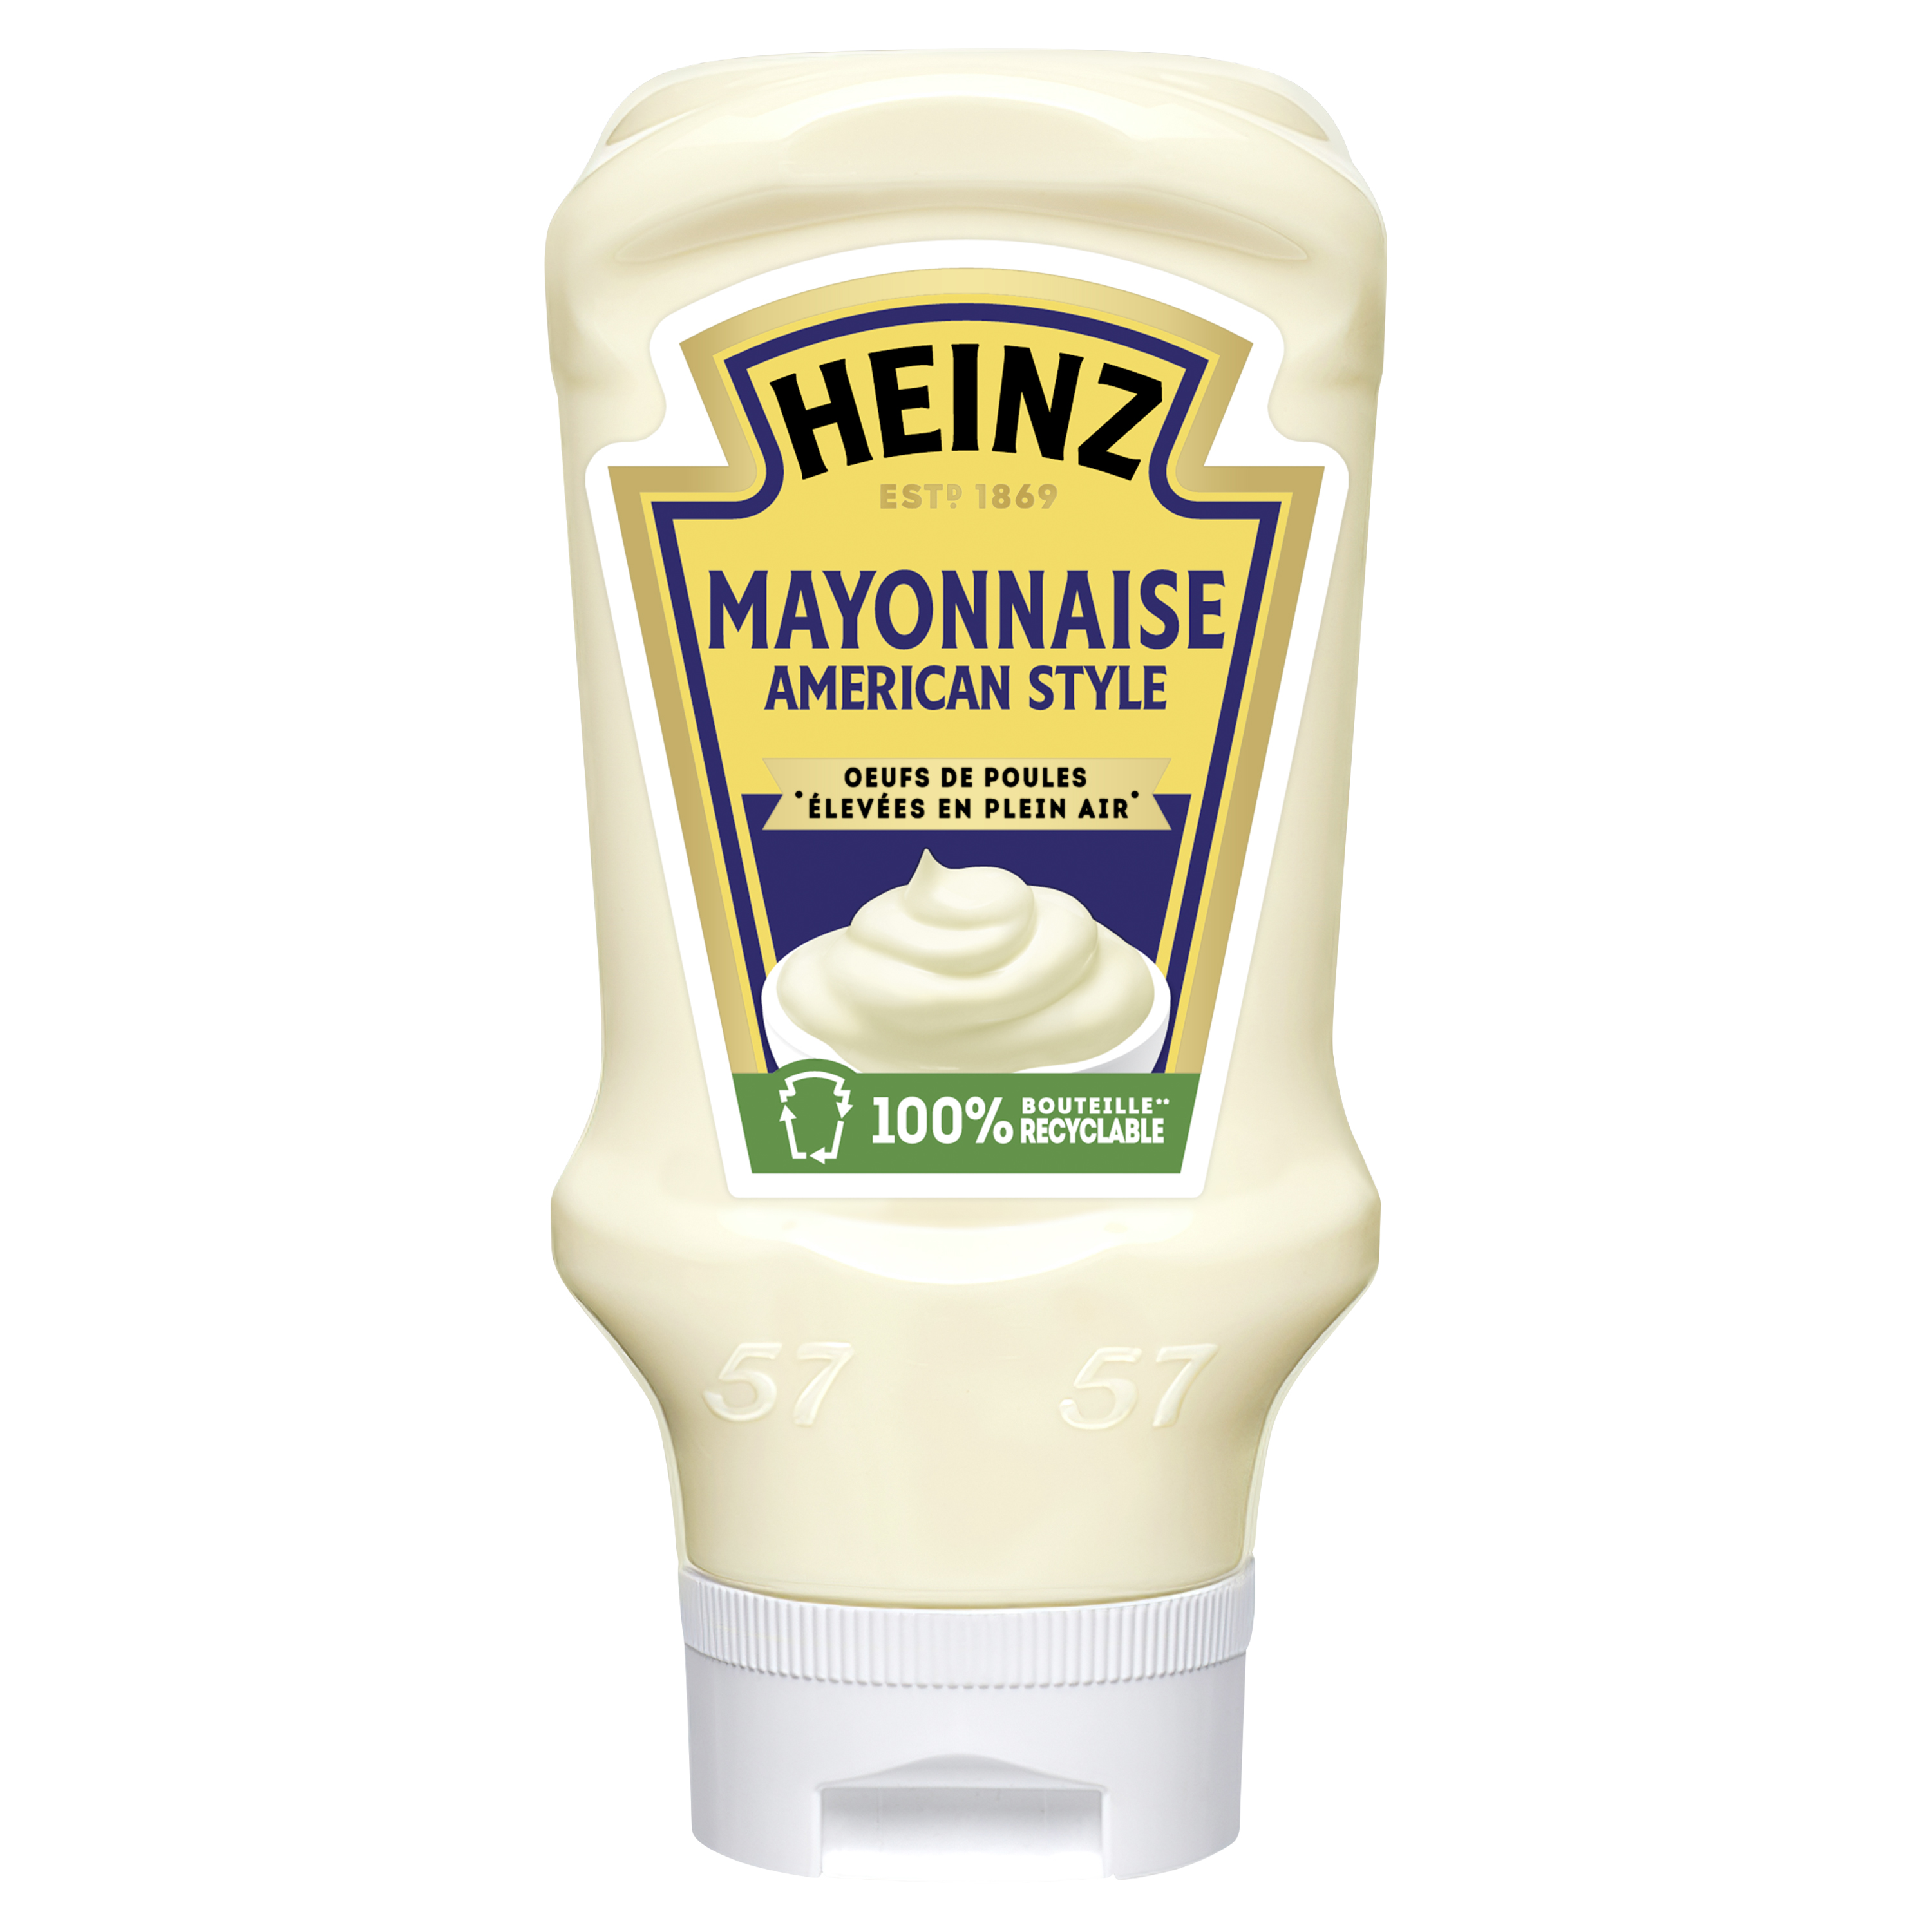 HEINZ Mayonnaise american style flacon souple 395g pas cher 